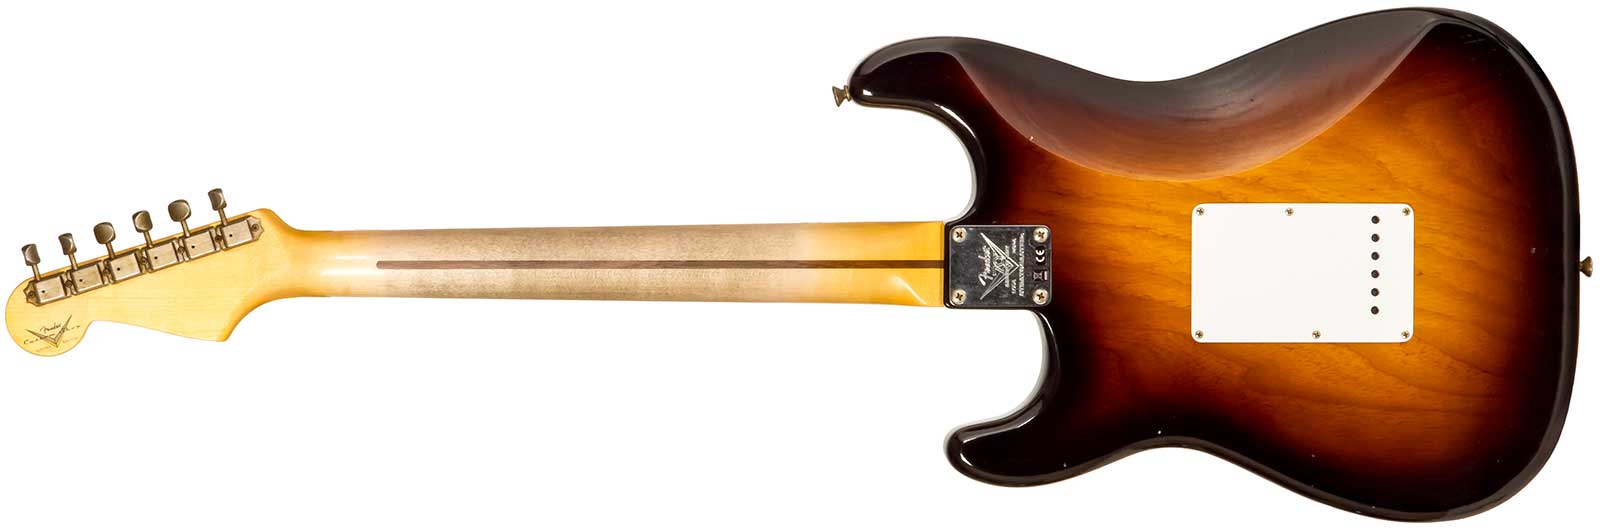 Fender Custom Shop Strat 1954 70th Anniv. 3s Trem Mn #xn4193 - Journeyman Relic Wide-fade 2-color Sunburst - E-Gitarre in Str-Form - Variation 2